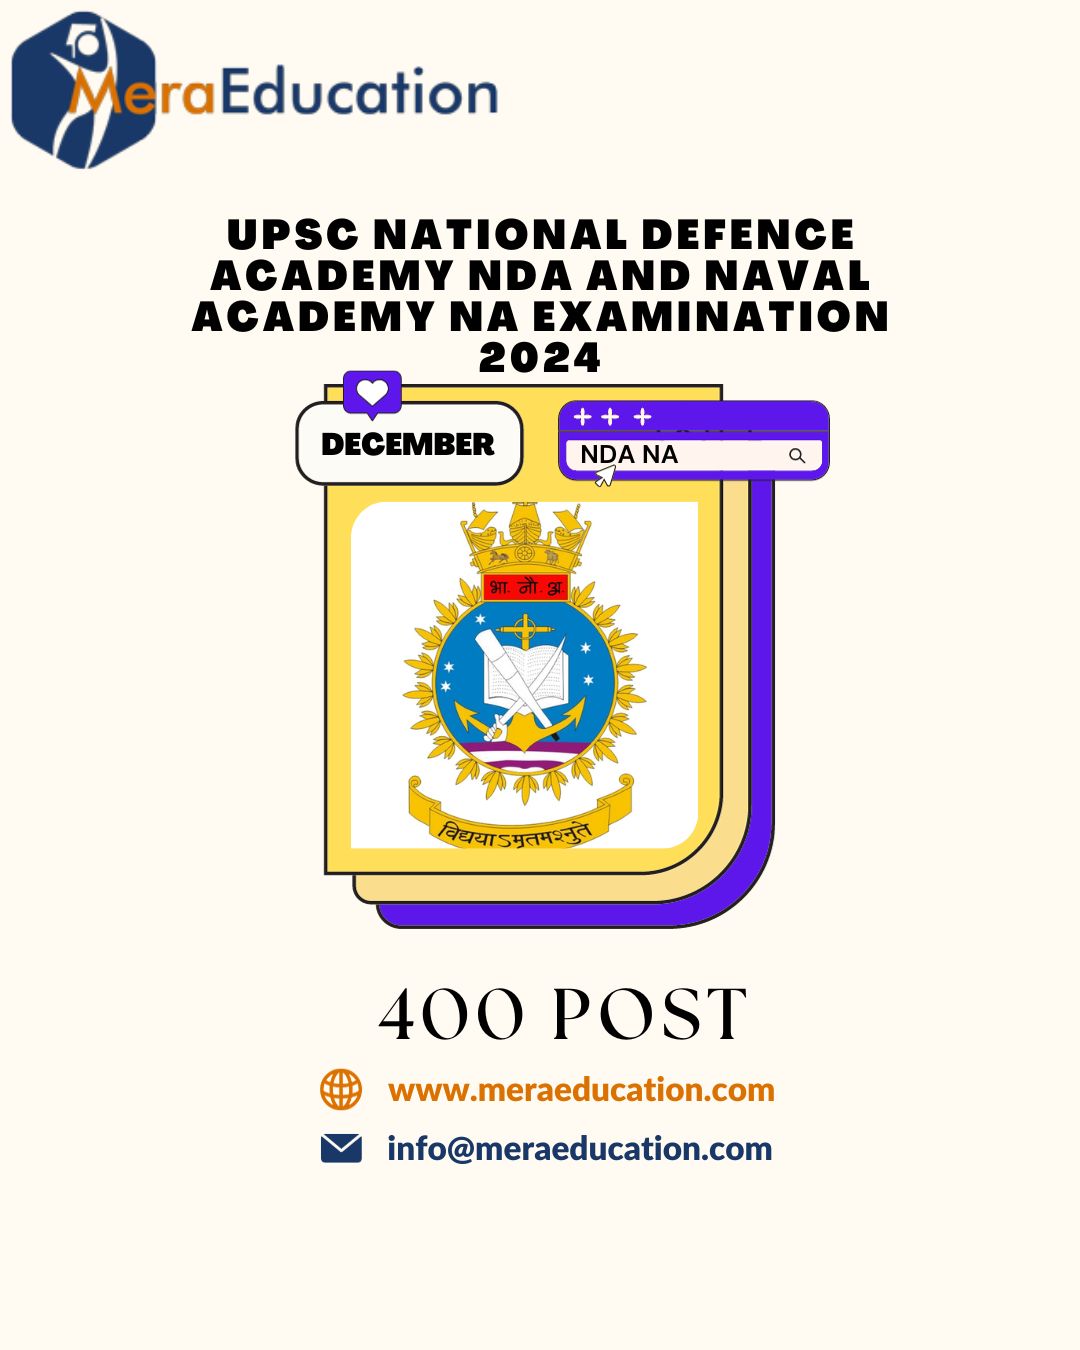 UPSC National Defense Academy NDA and Naval Academy Exam 2024